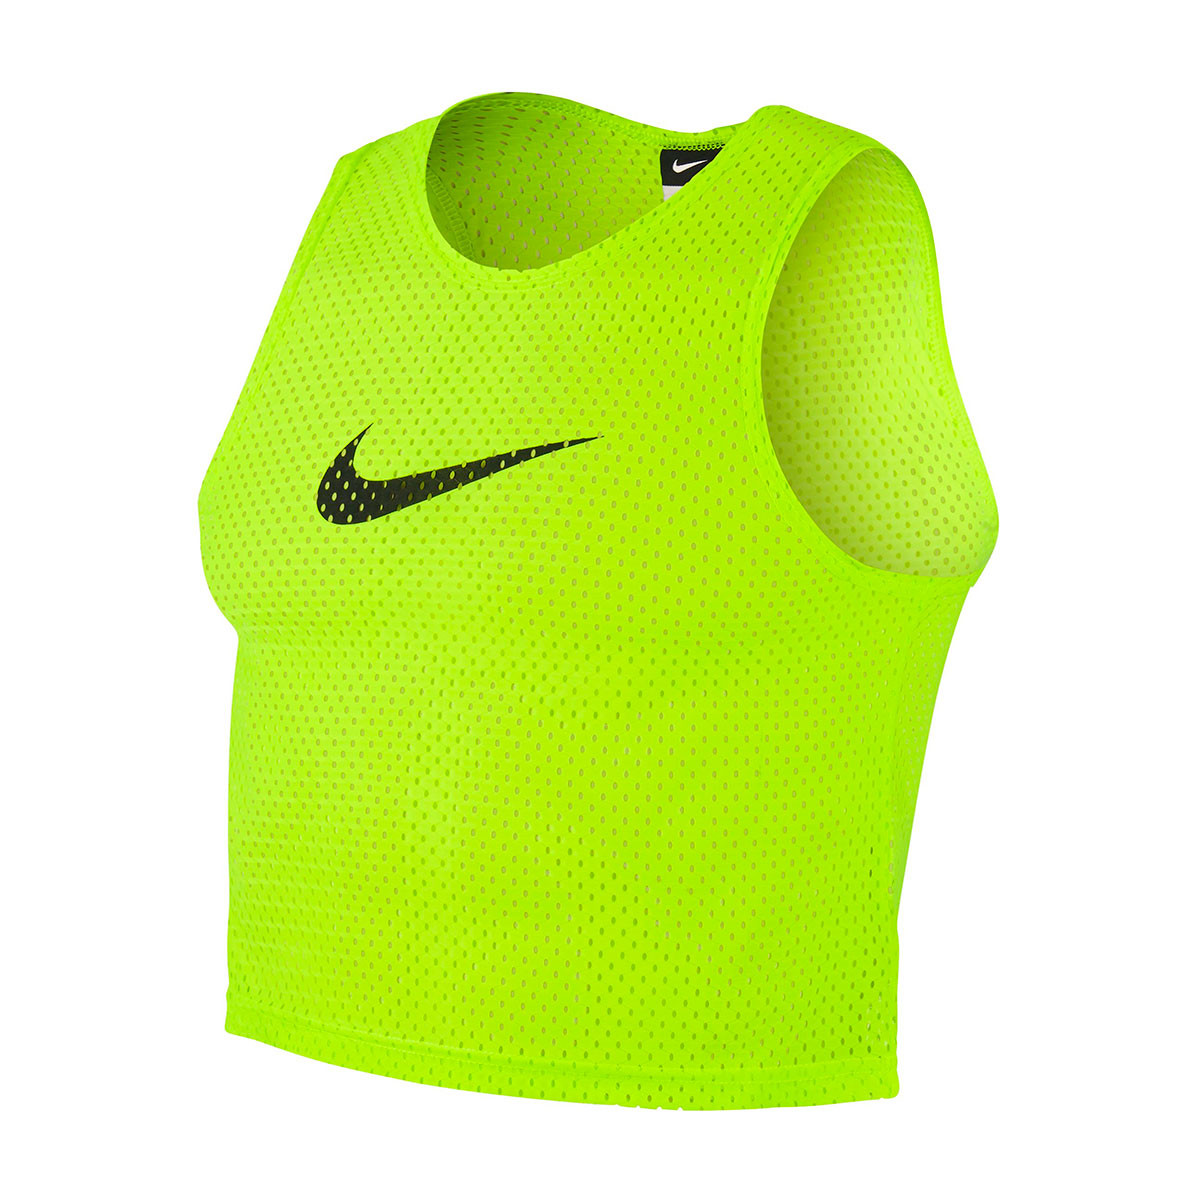 Ánimo radiador visa Shop Playera Nike Training Bib | UP TO 57% OFF